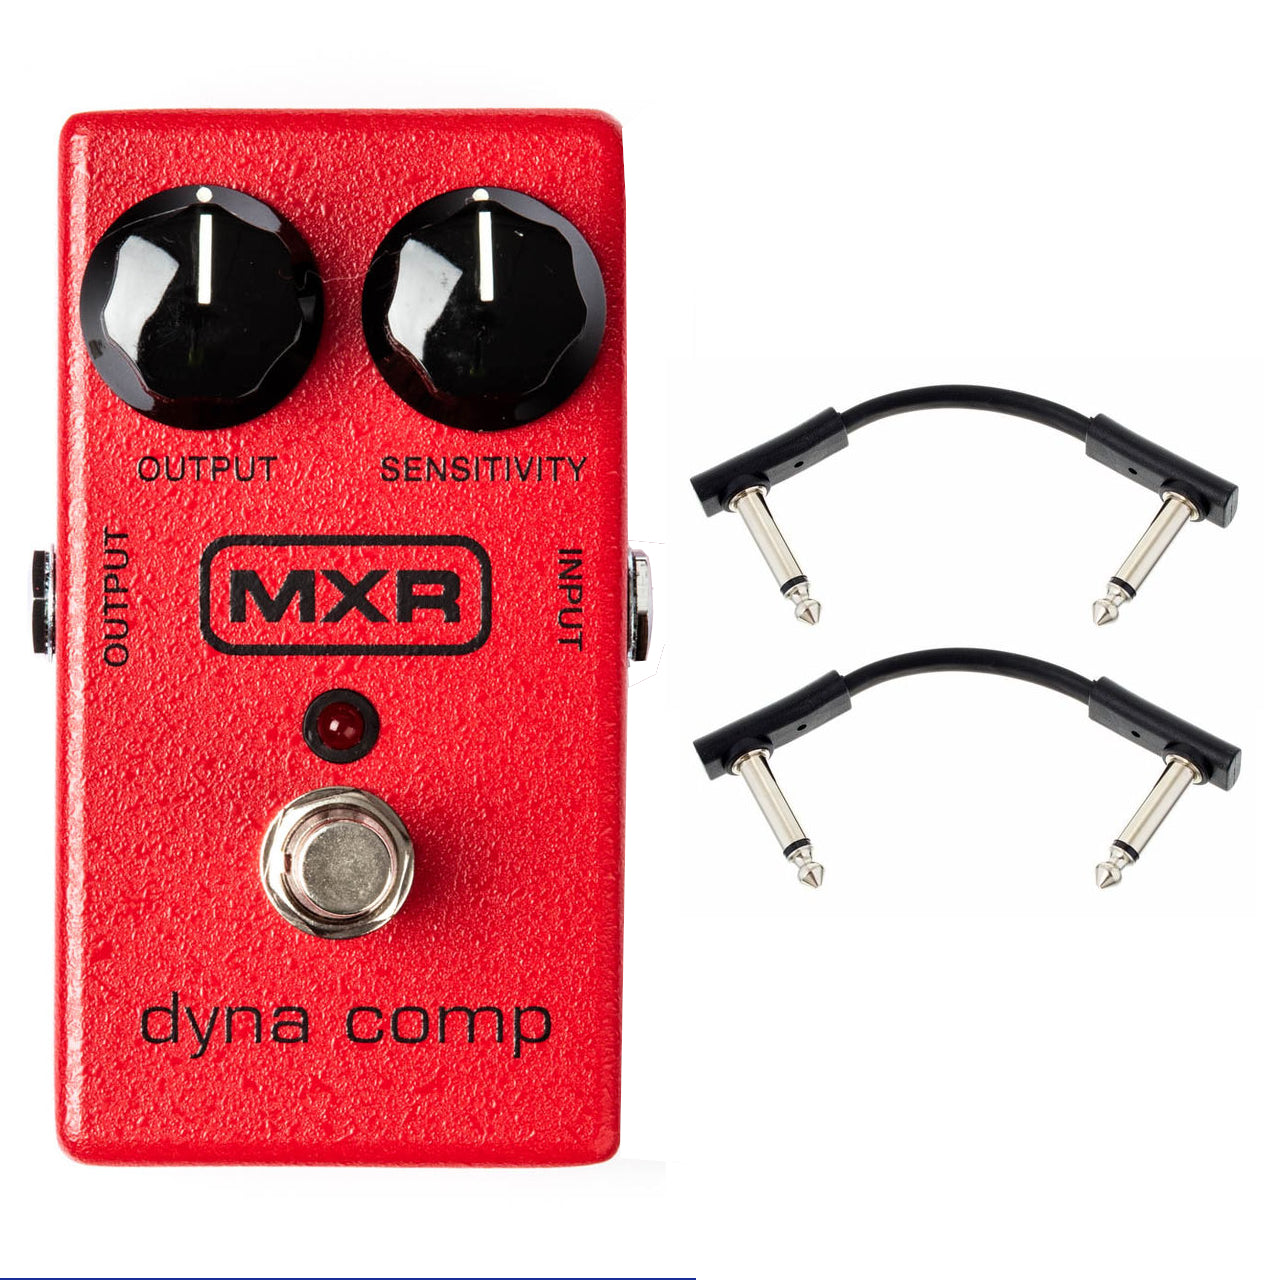 Dunlop MXR M102 Dyna Comp Compressor Guitar Effect Pedal + 2 FREE Warwick Patch Cables